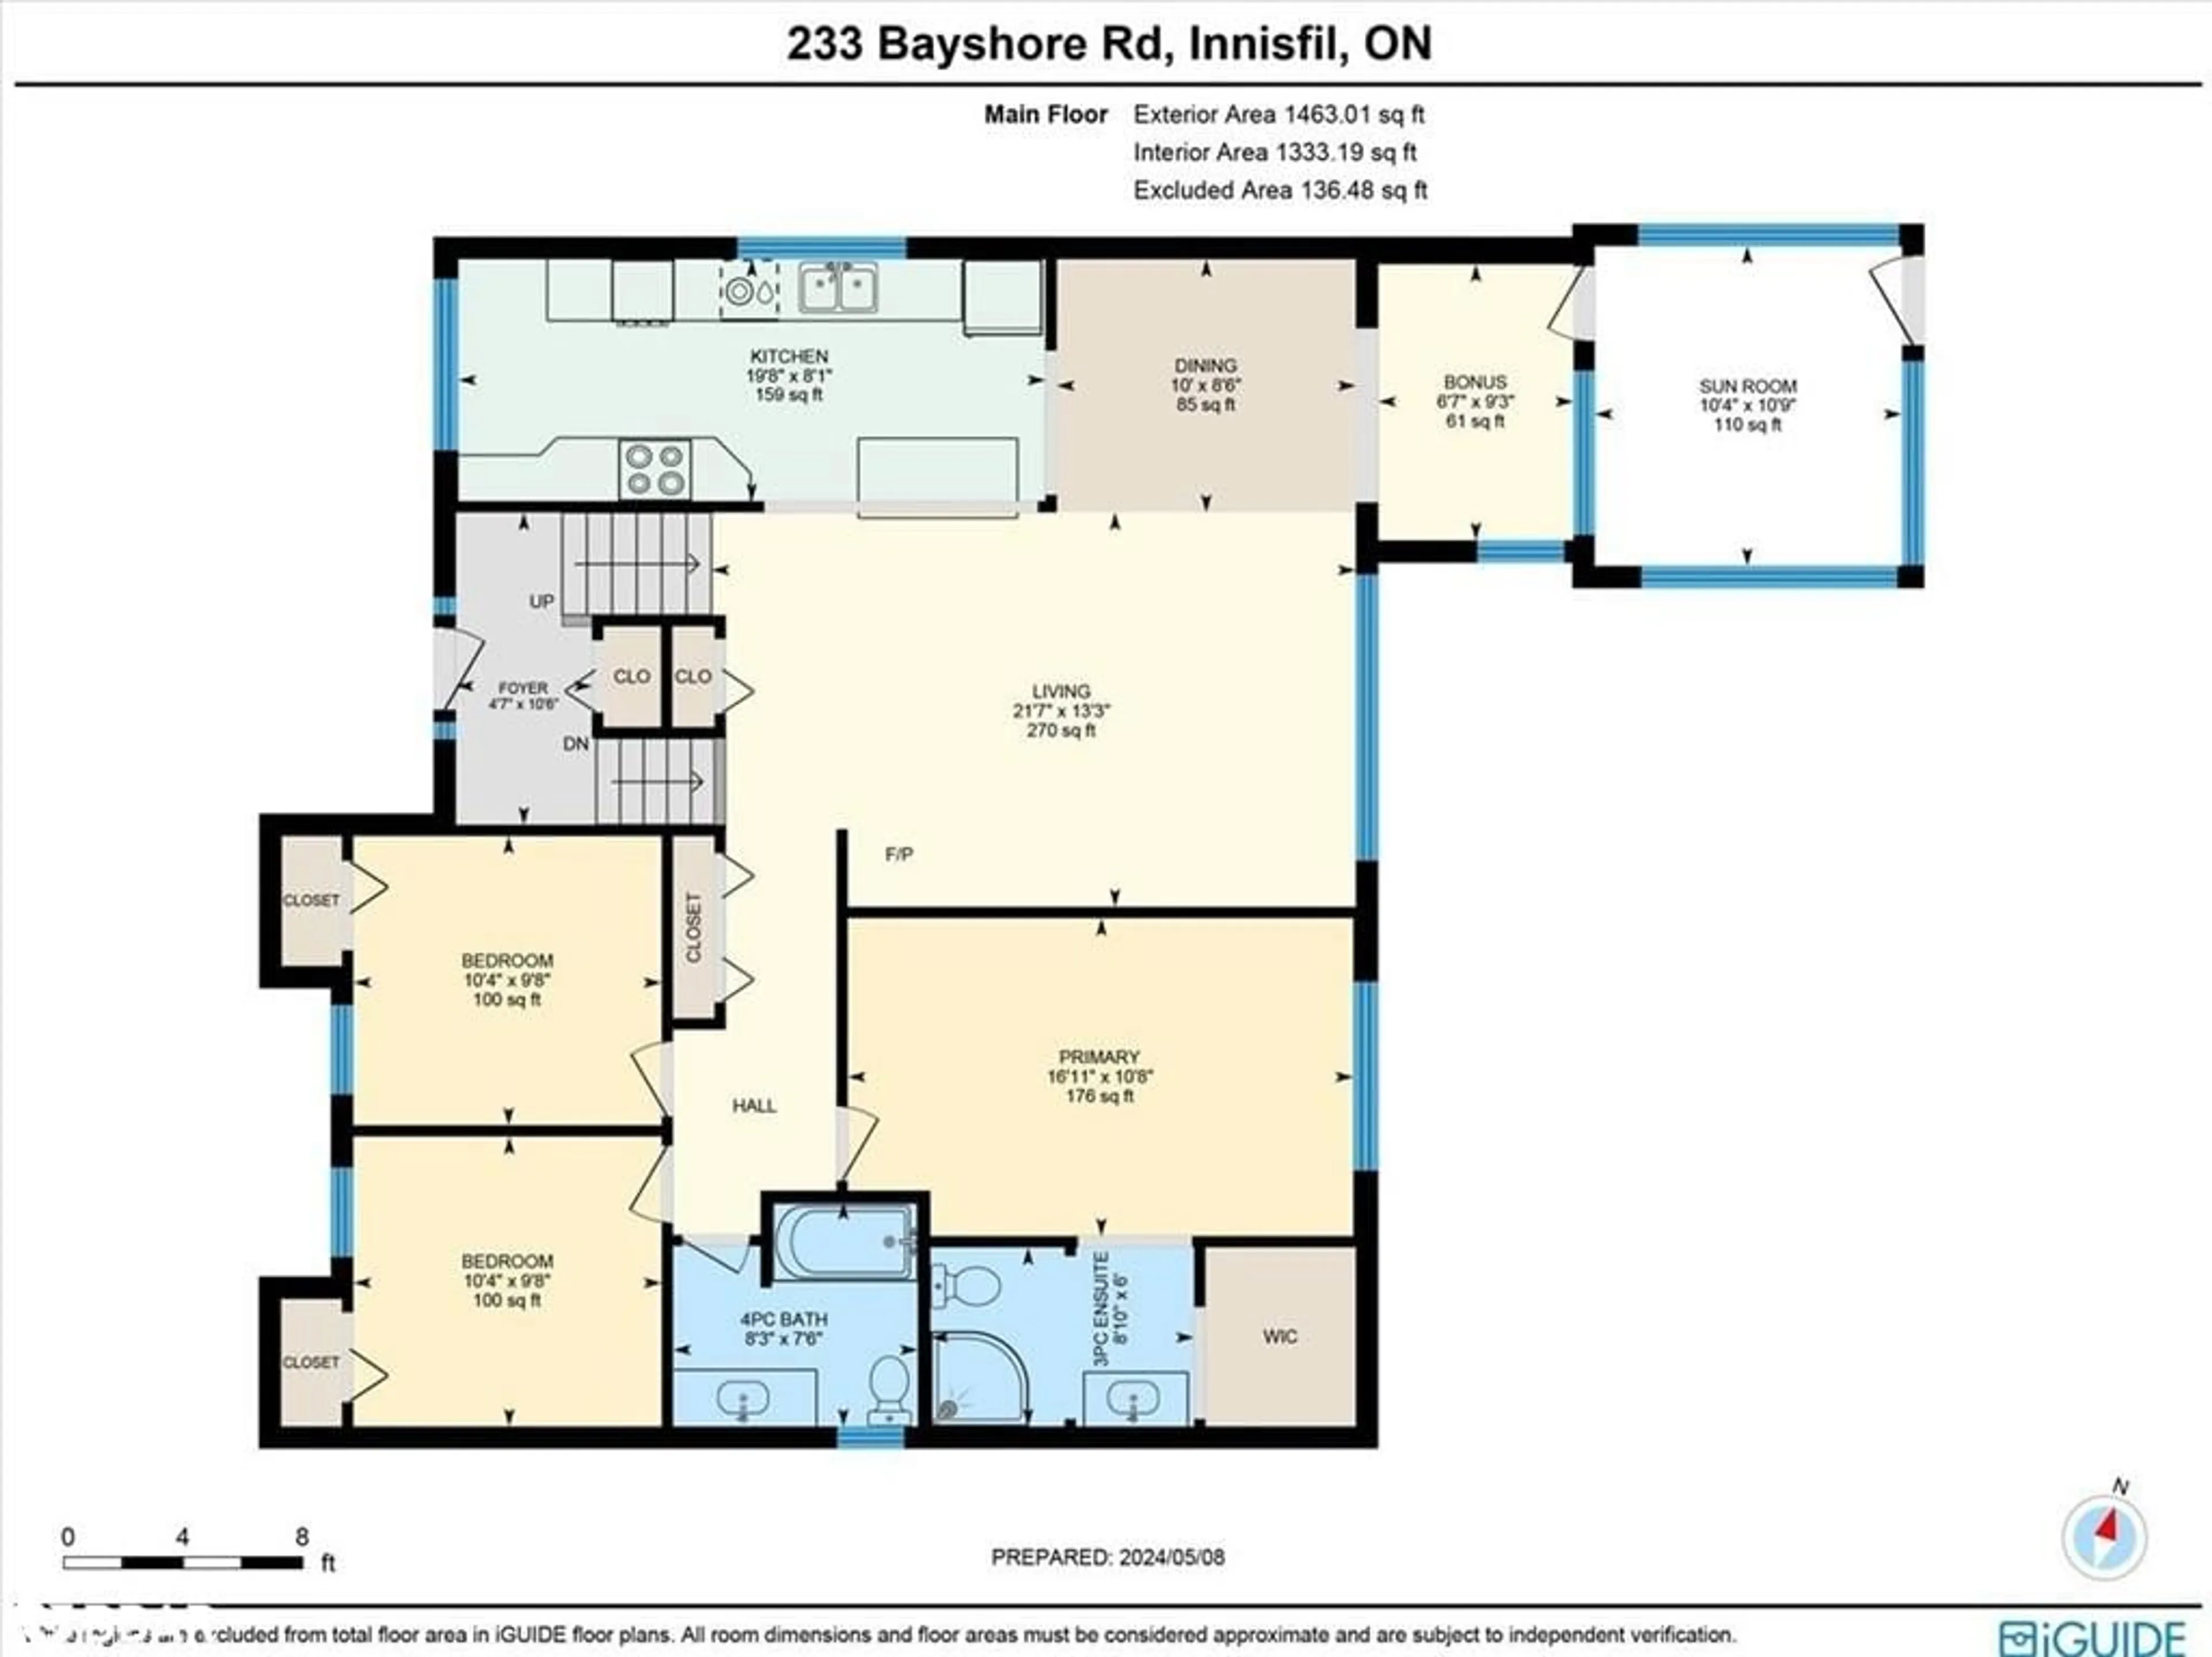 Floor plan for 233 Bayshore Rd, Innisfil Ontario L0L 1R0